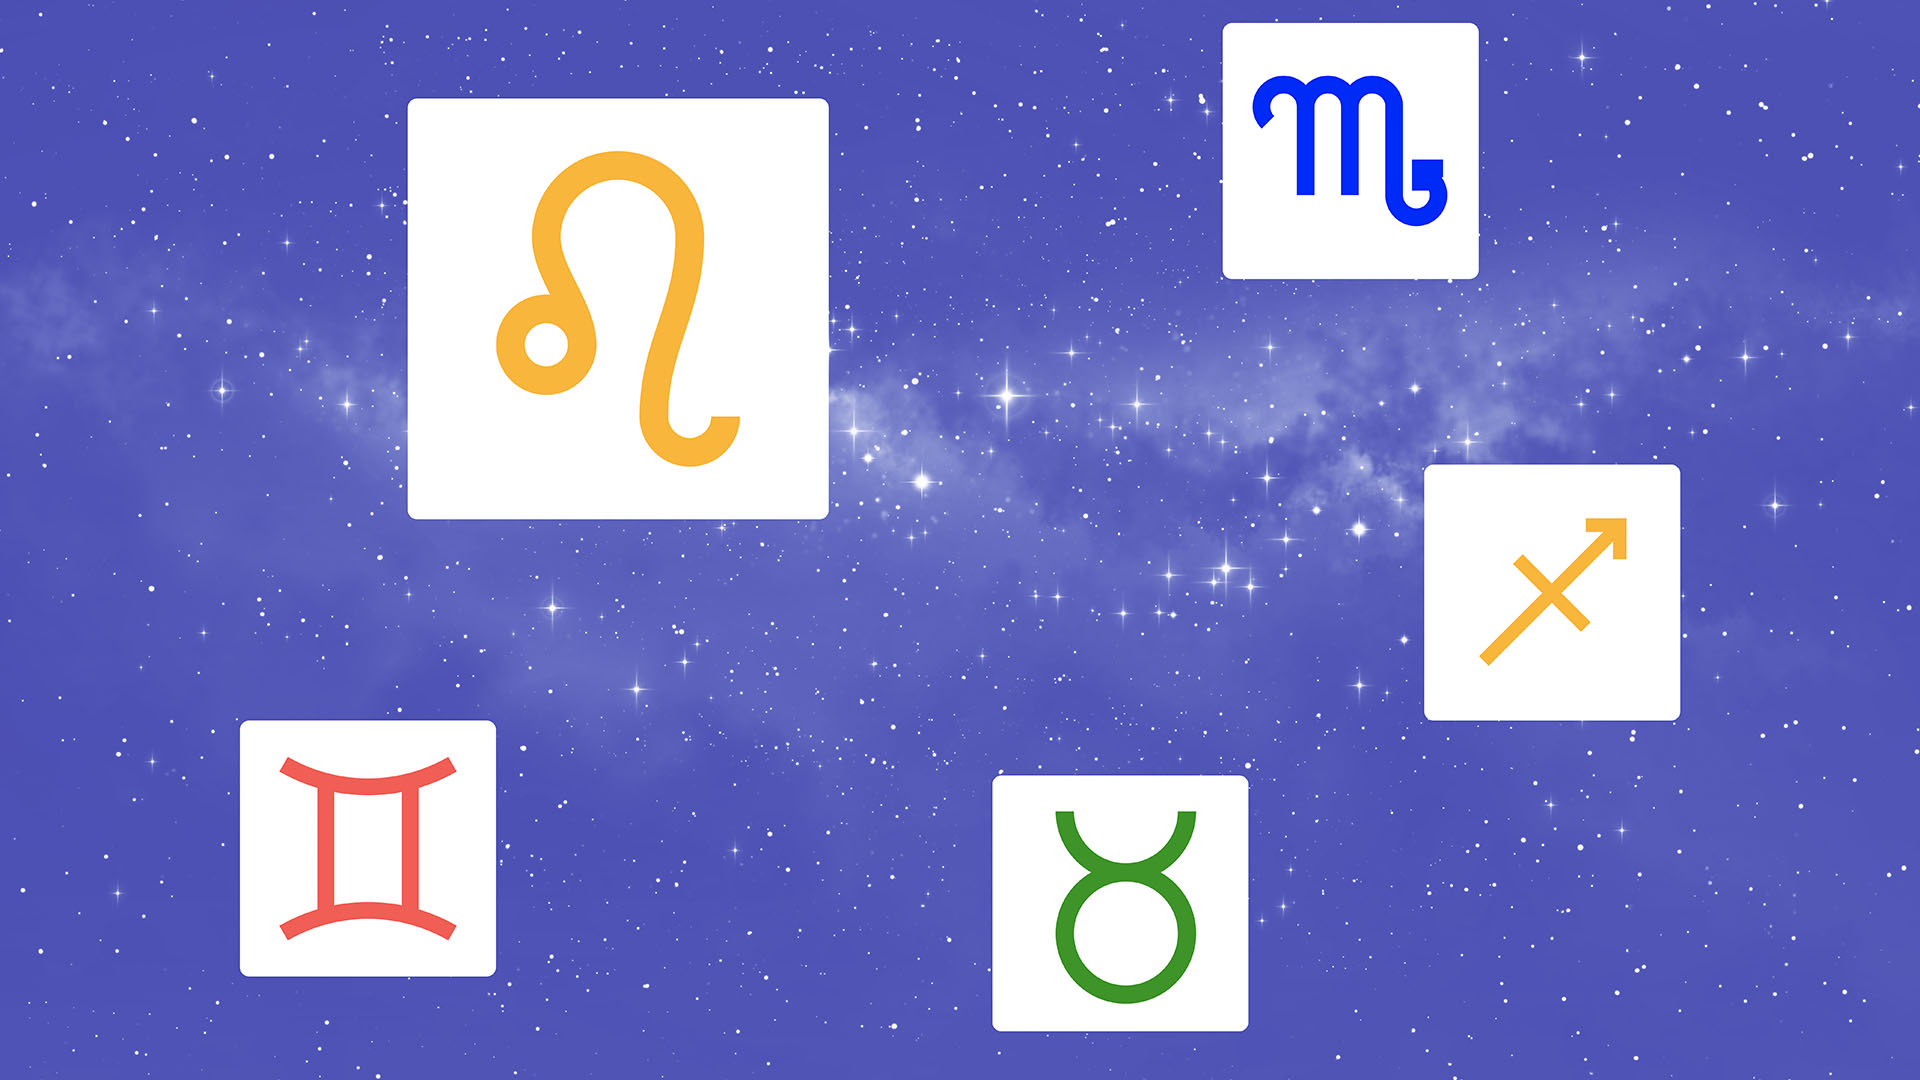 Understanding Zodiac Signs Constellations 